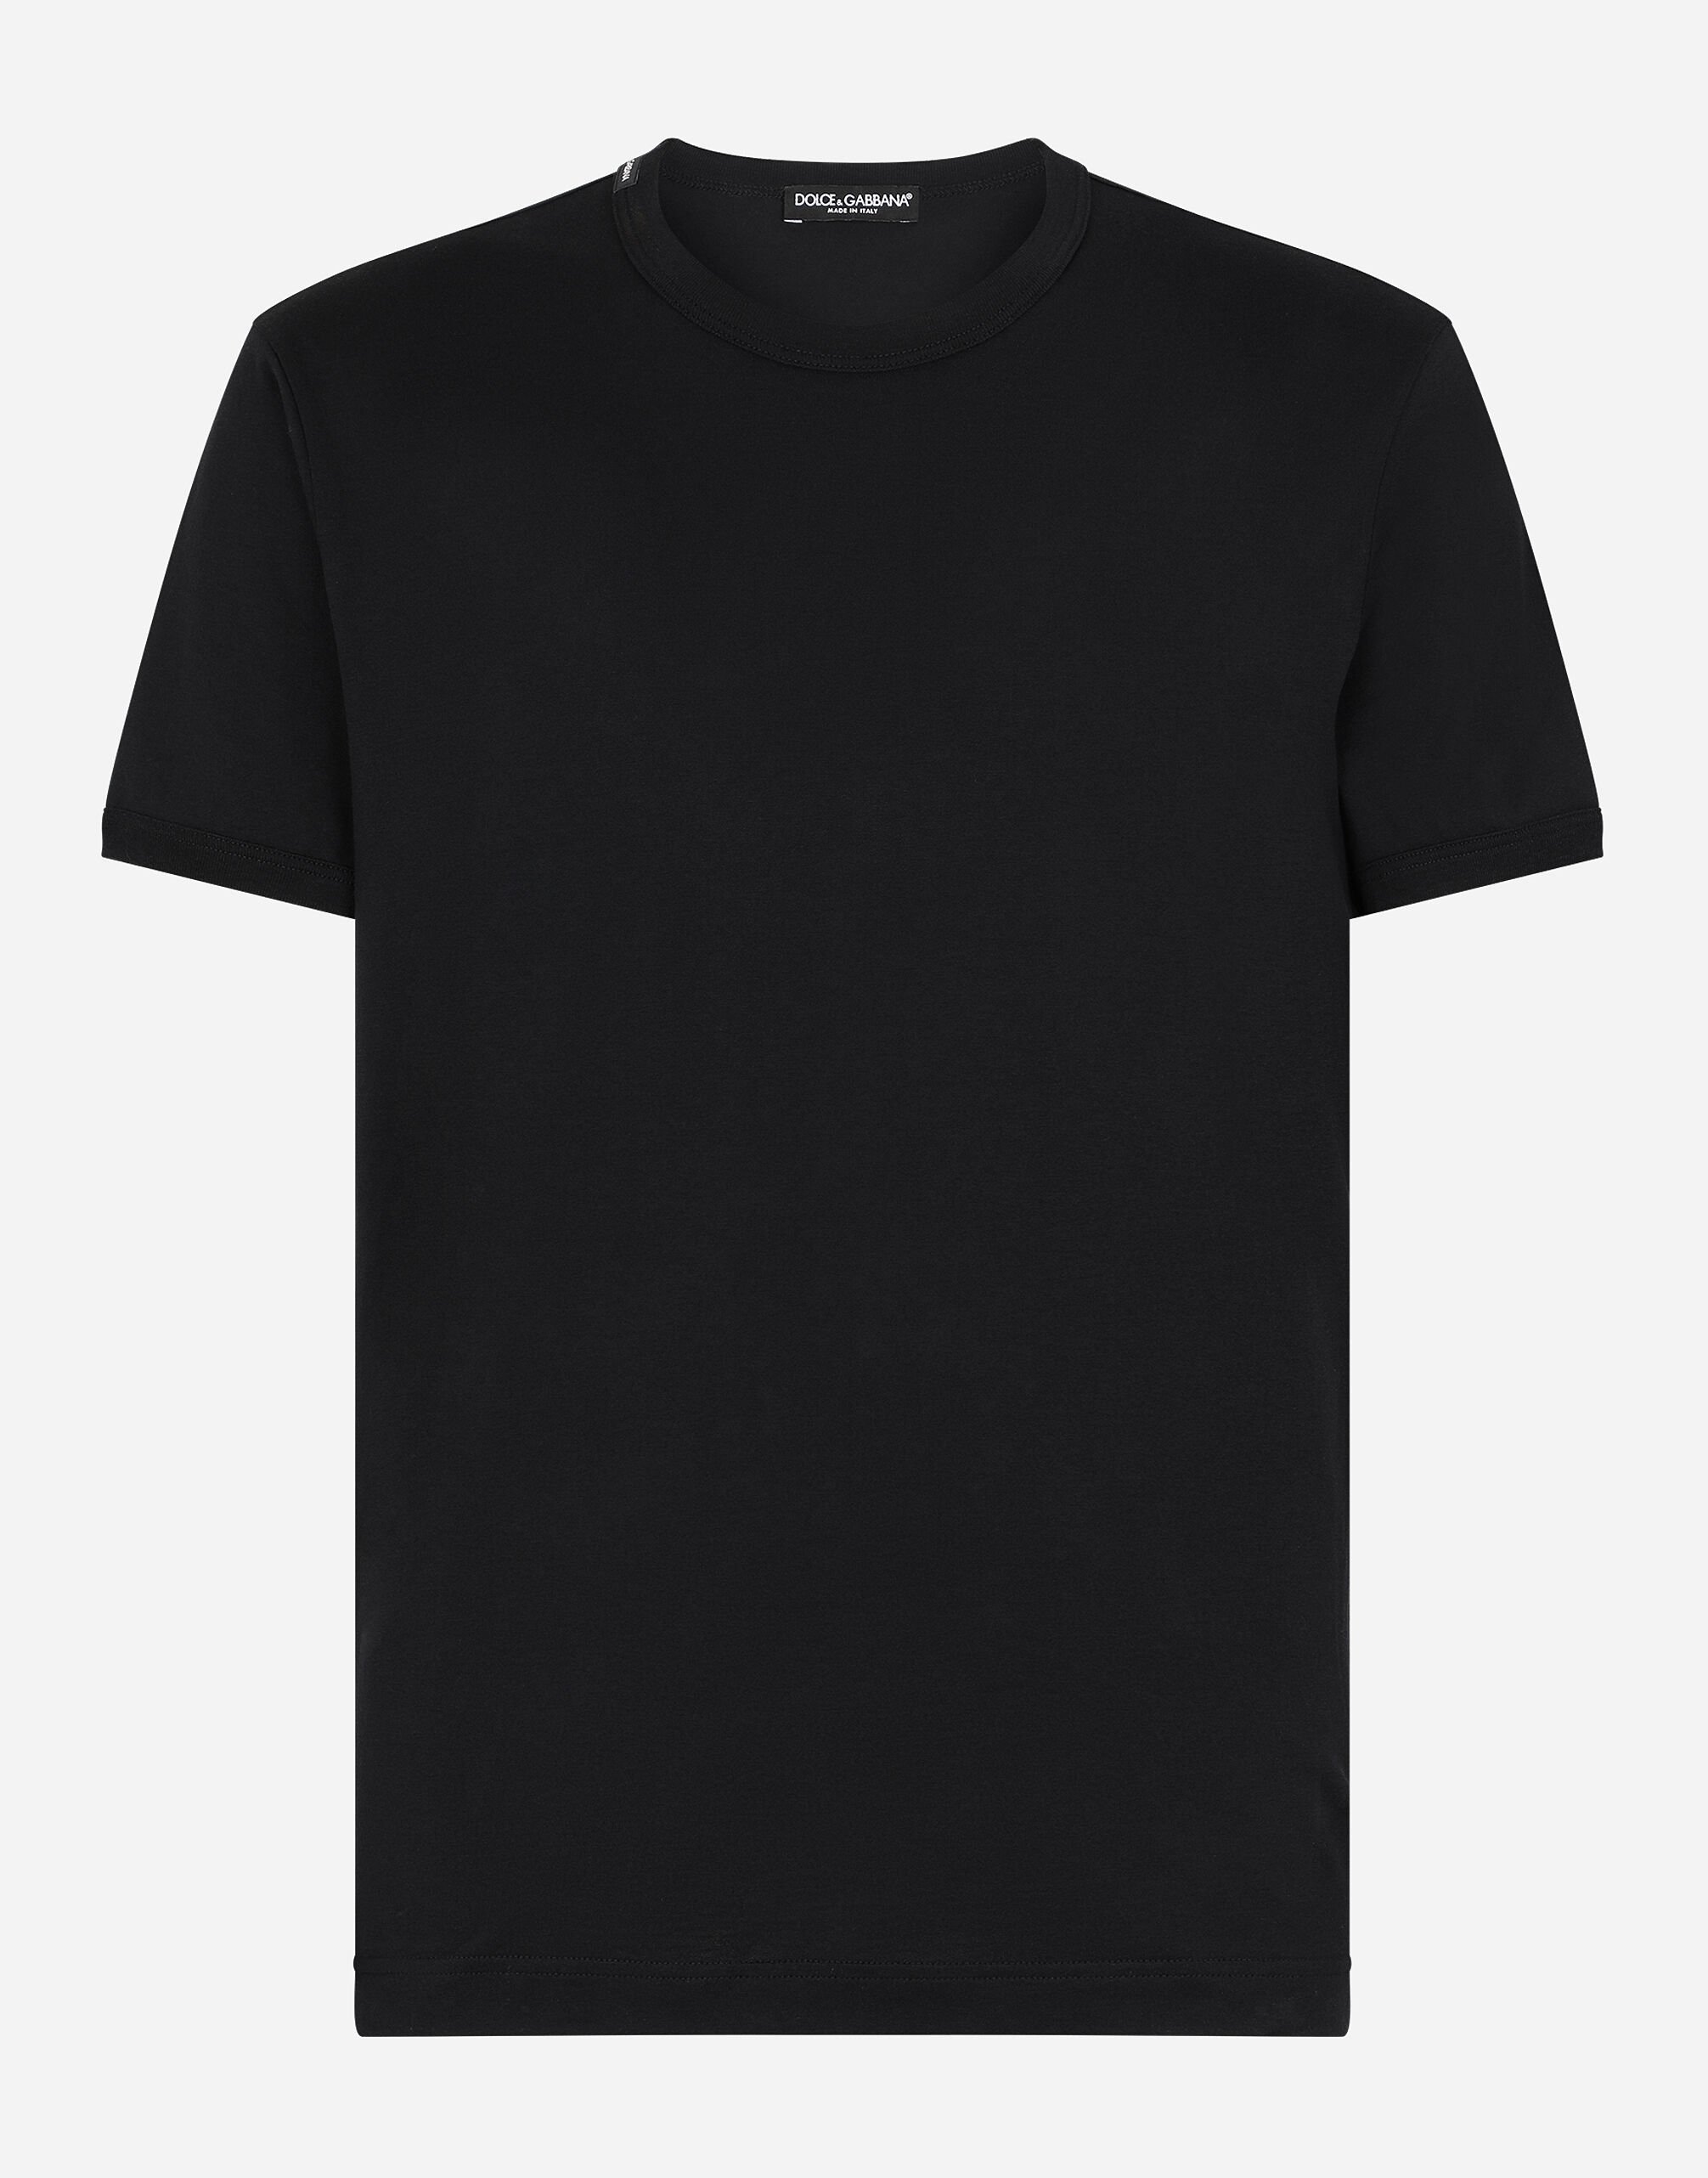 Dolce&Gabbana Camiseta algodón con logo Black GY6IETFUFJR